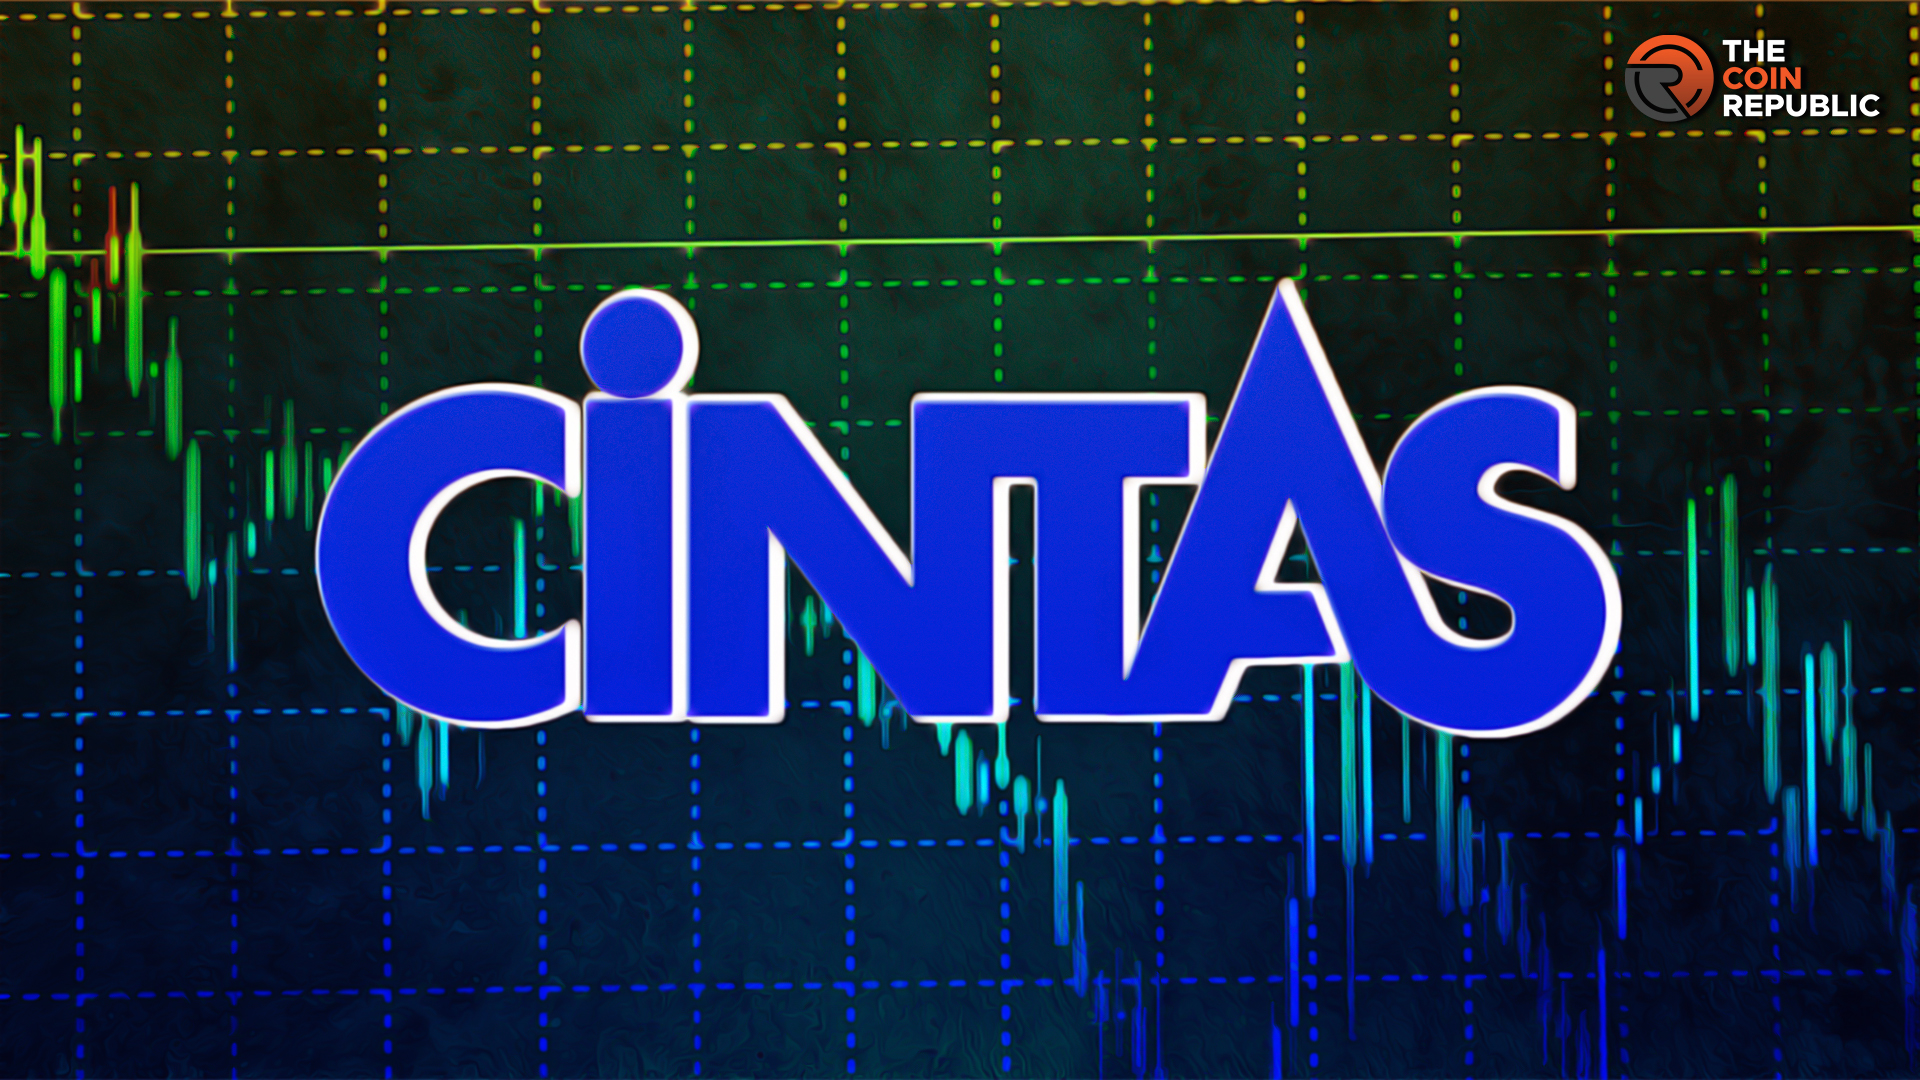 Cintas Corporation: Will CTAS Stock Skip Declining Streak on Monday?